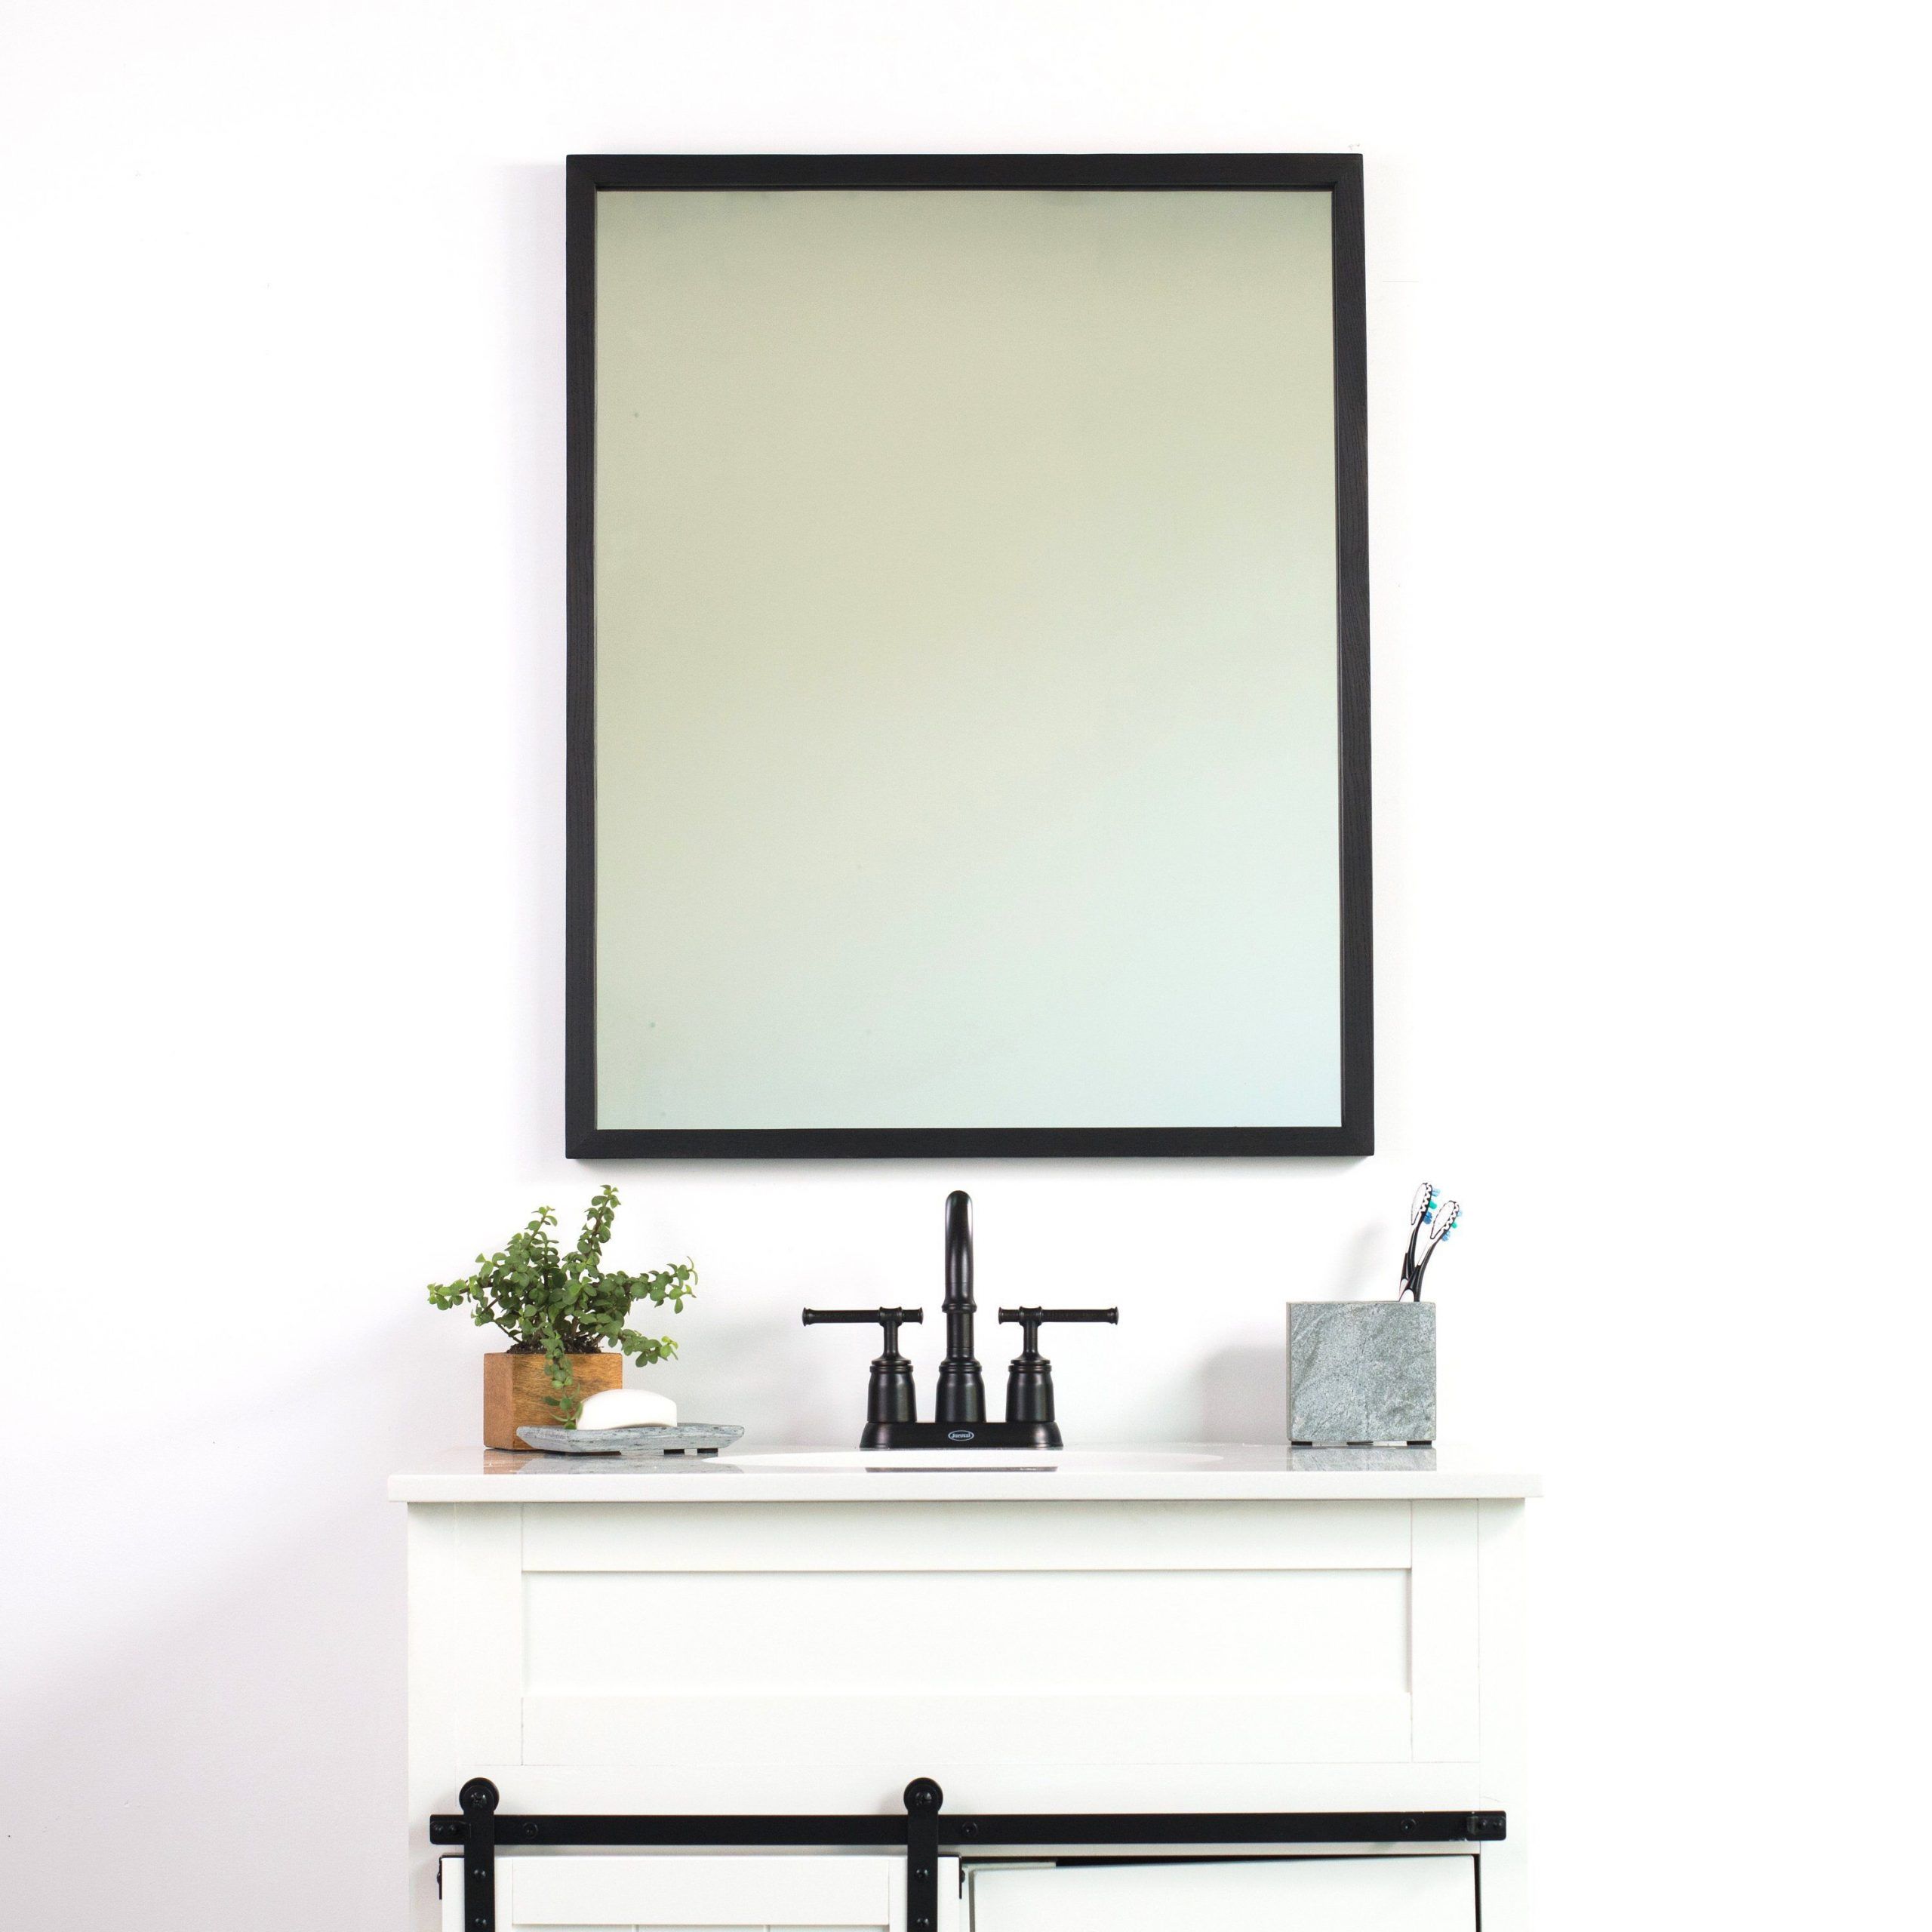 Black Bathroom Wall Mirror Thin Wall Mirror Modern Rustic | Etsy Inside Black Wood Wall Mirrors (View 1 of 15)